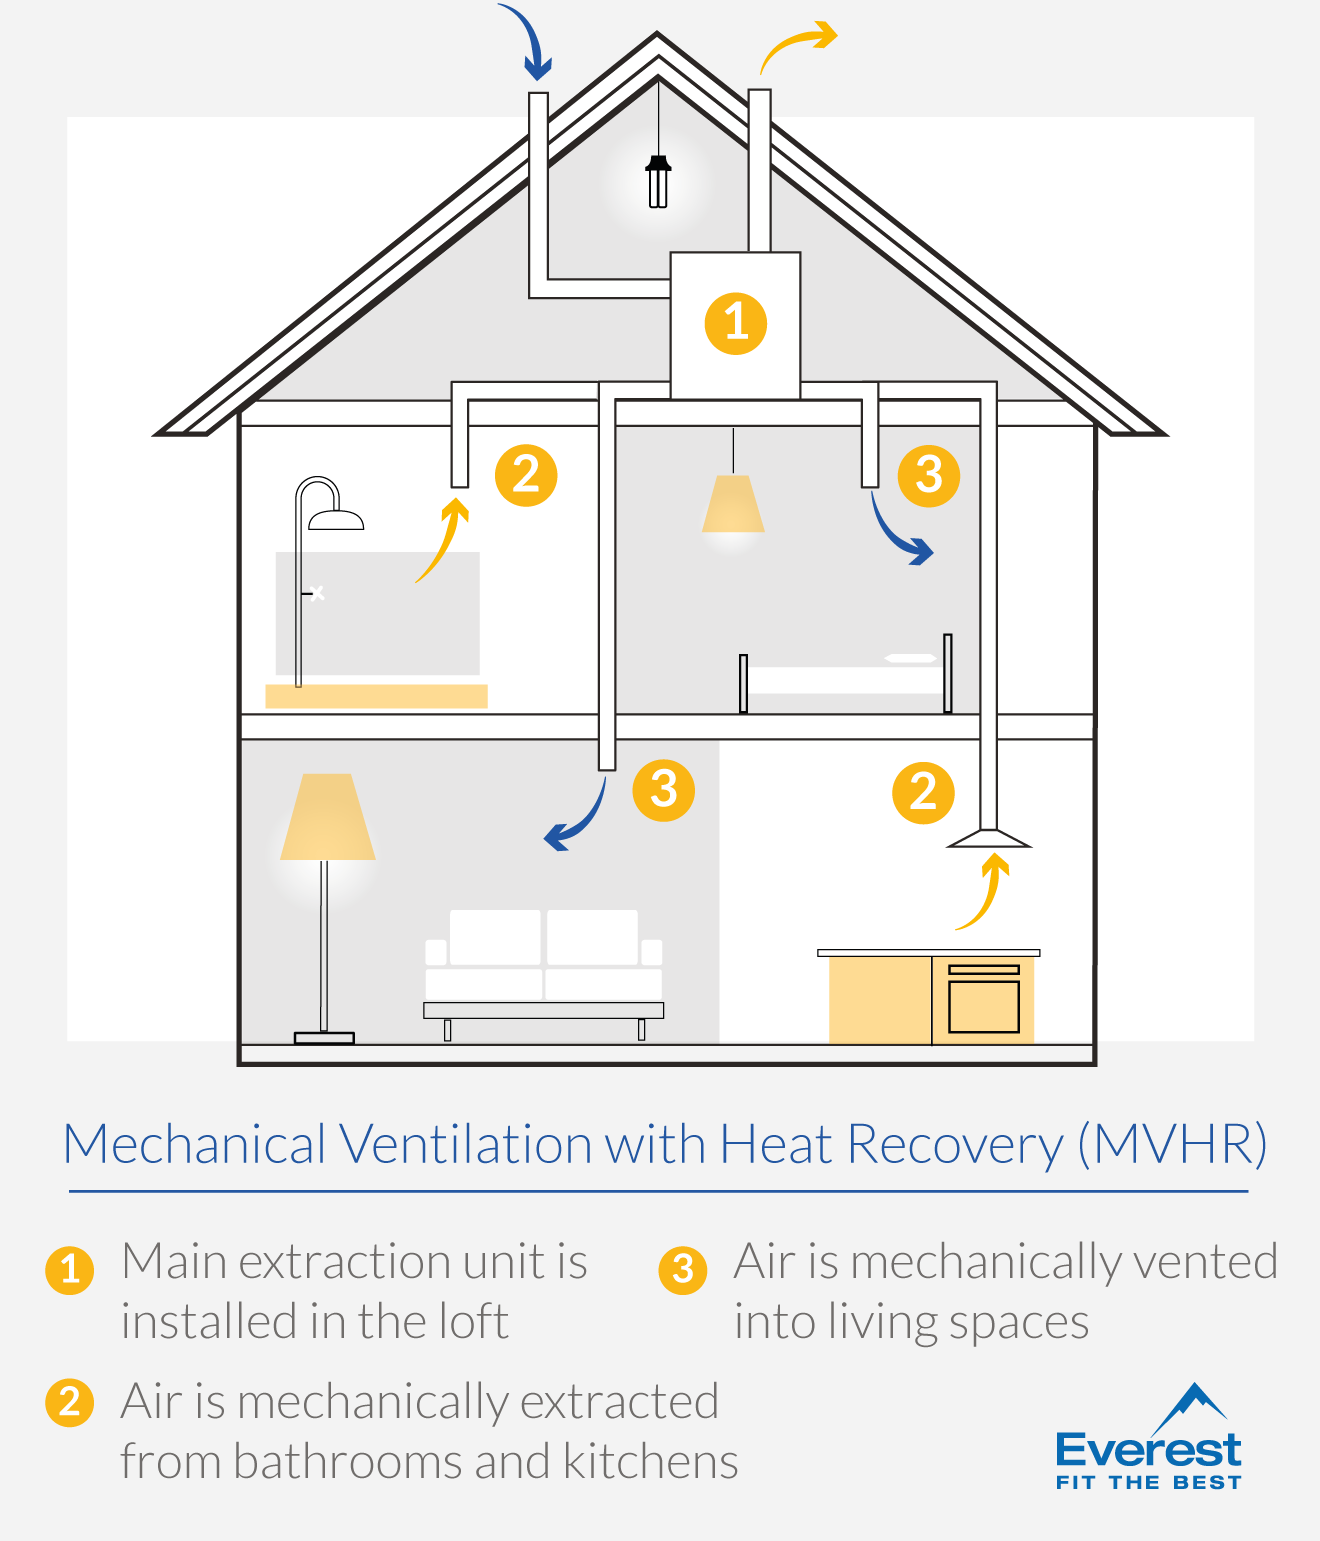 What is Mechanical ventilation (MVHR)?